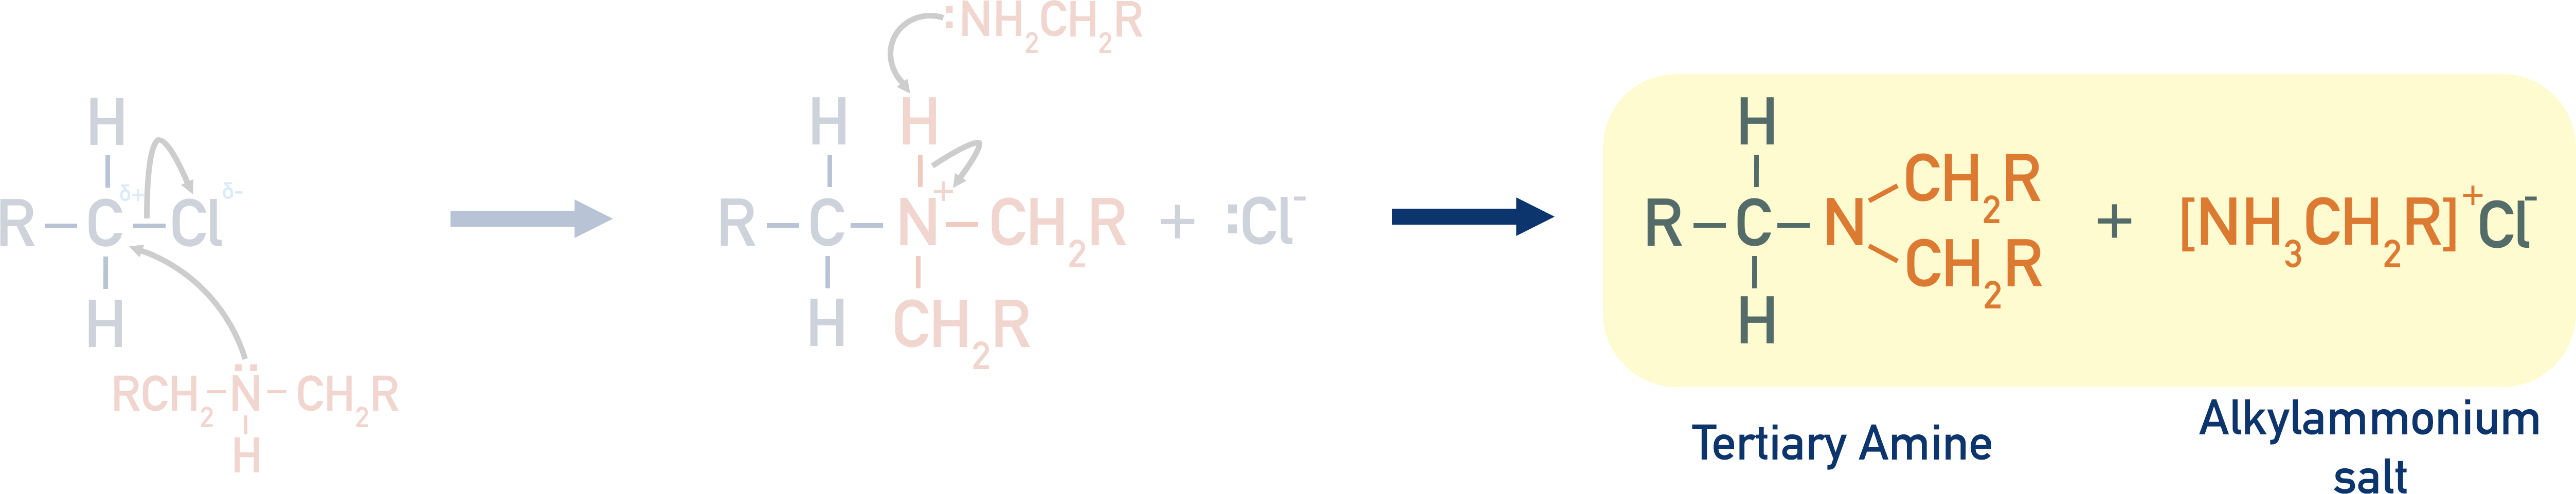 tertiary amine mechanism from halogenoalkane and secondary amine products